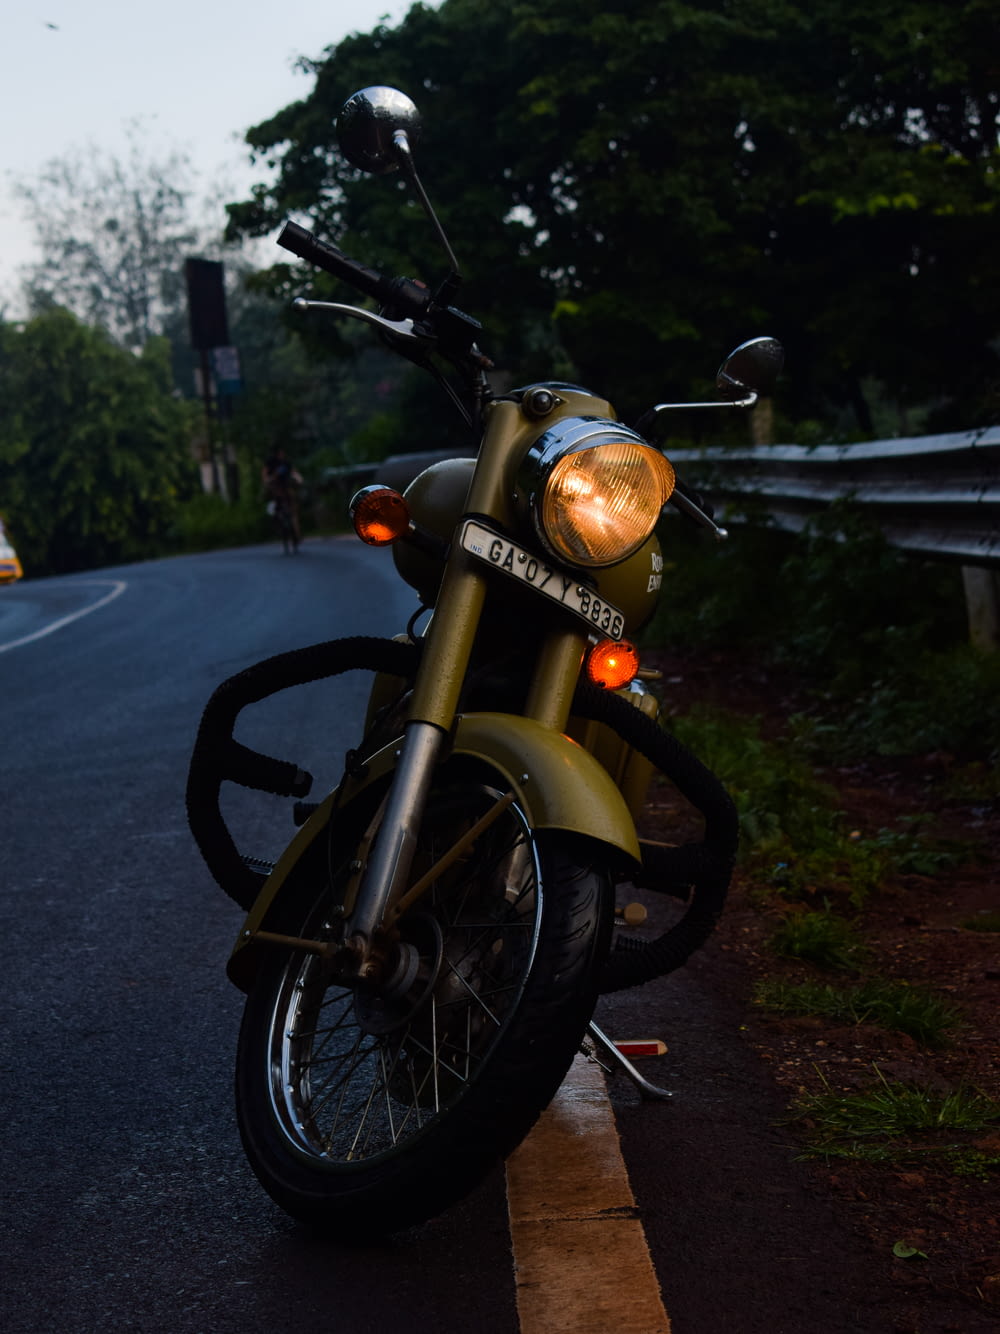 Motocicleta naranja y negra estacionada al costado de la carretera